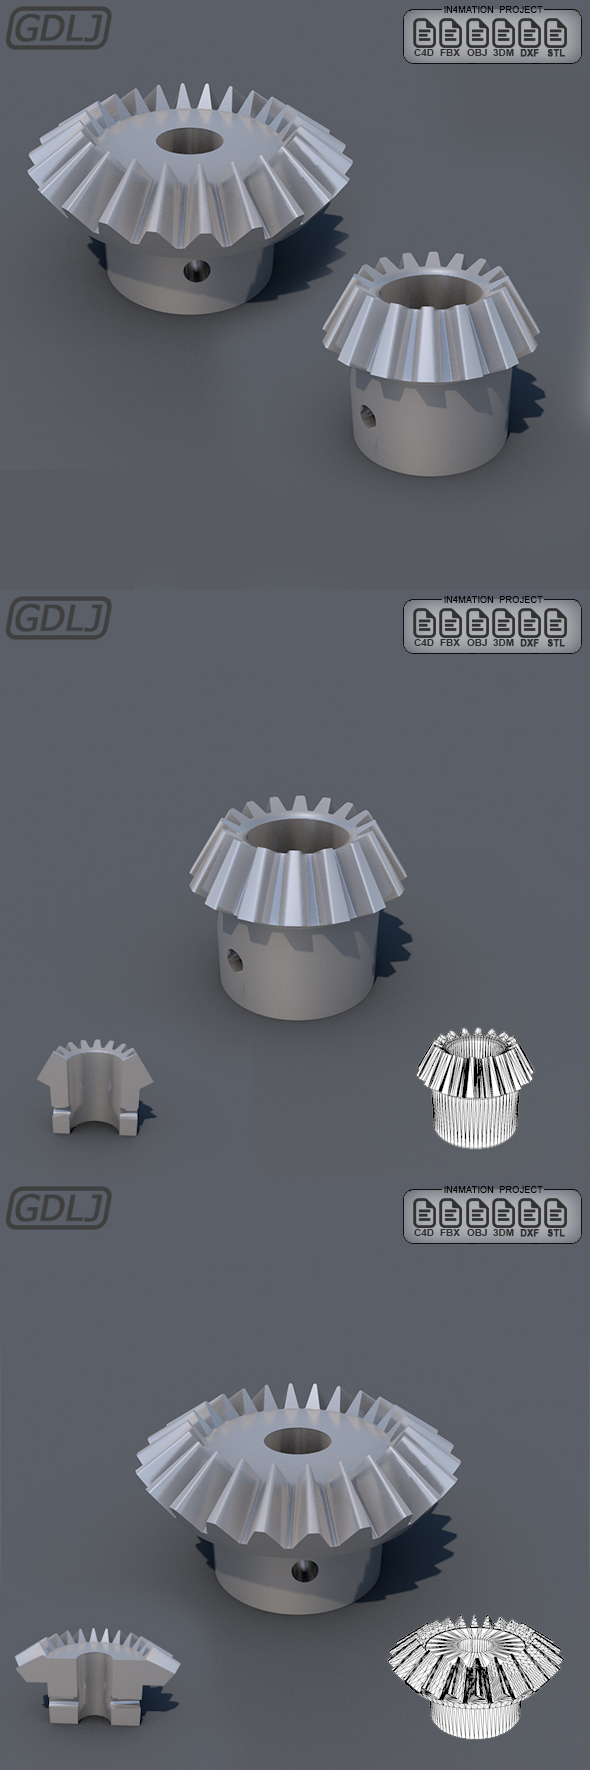 Conical gears 3D - 3Docean 21971925